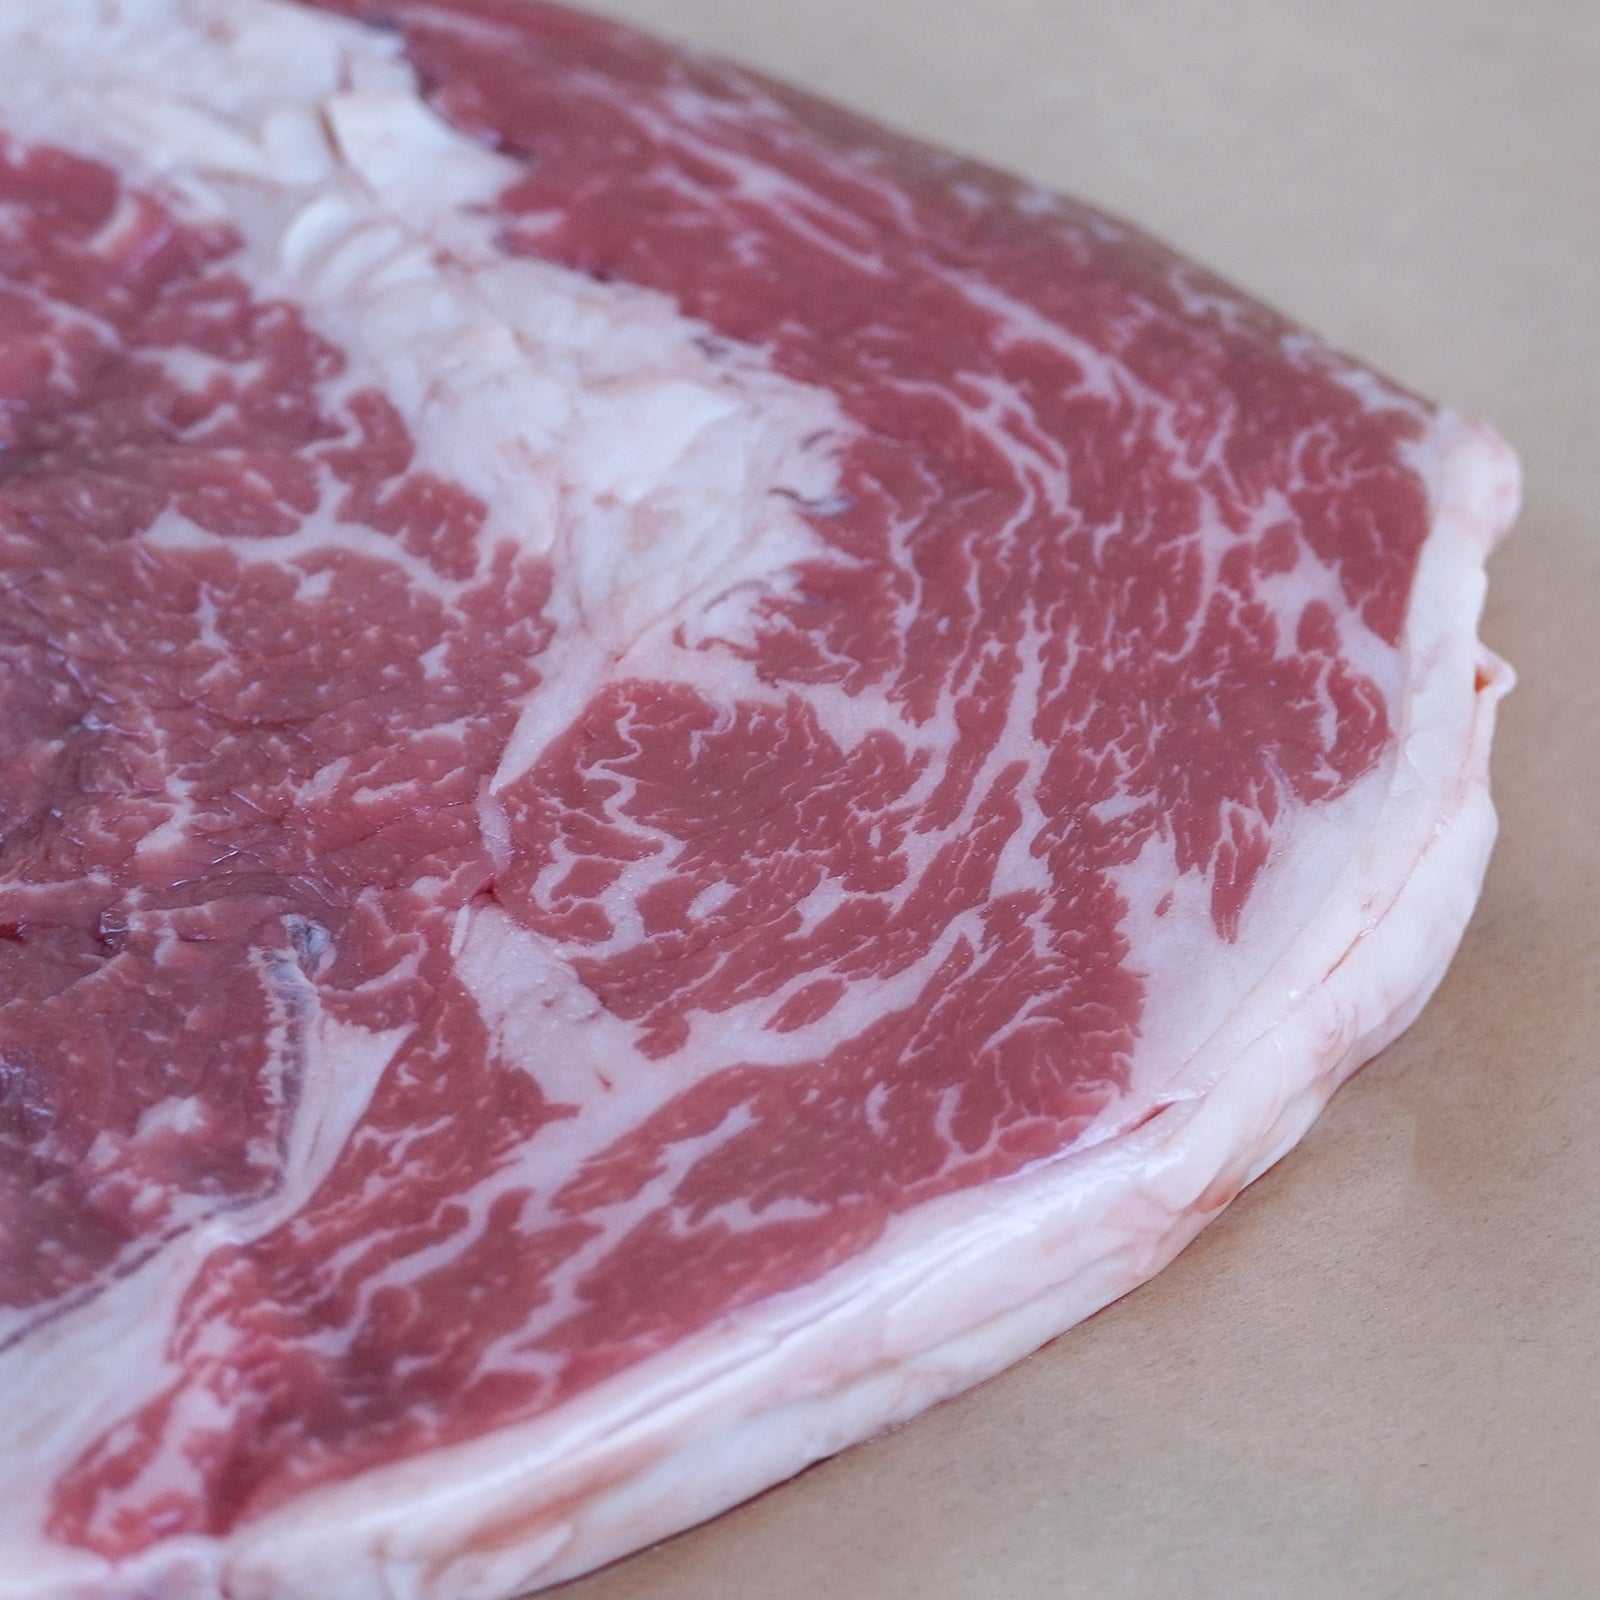 Morgan Ranch USDA Prime Beef Ribeye Steak (200g) - Horizon Farms